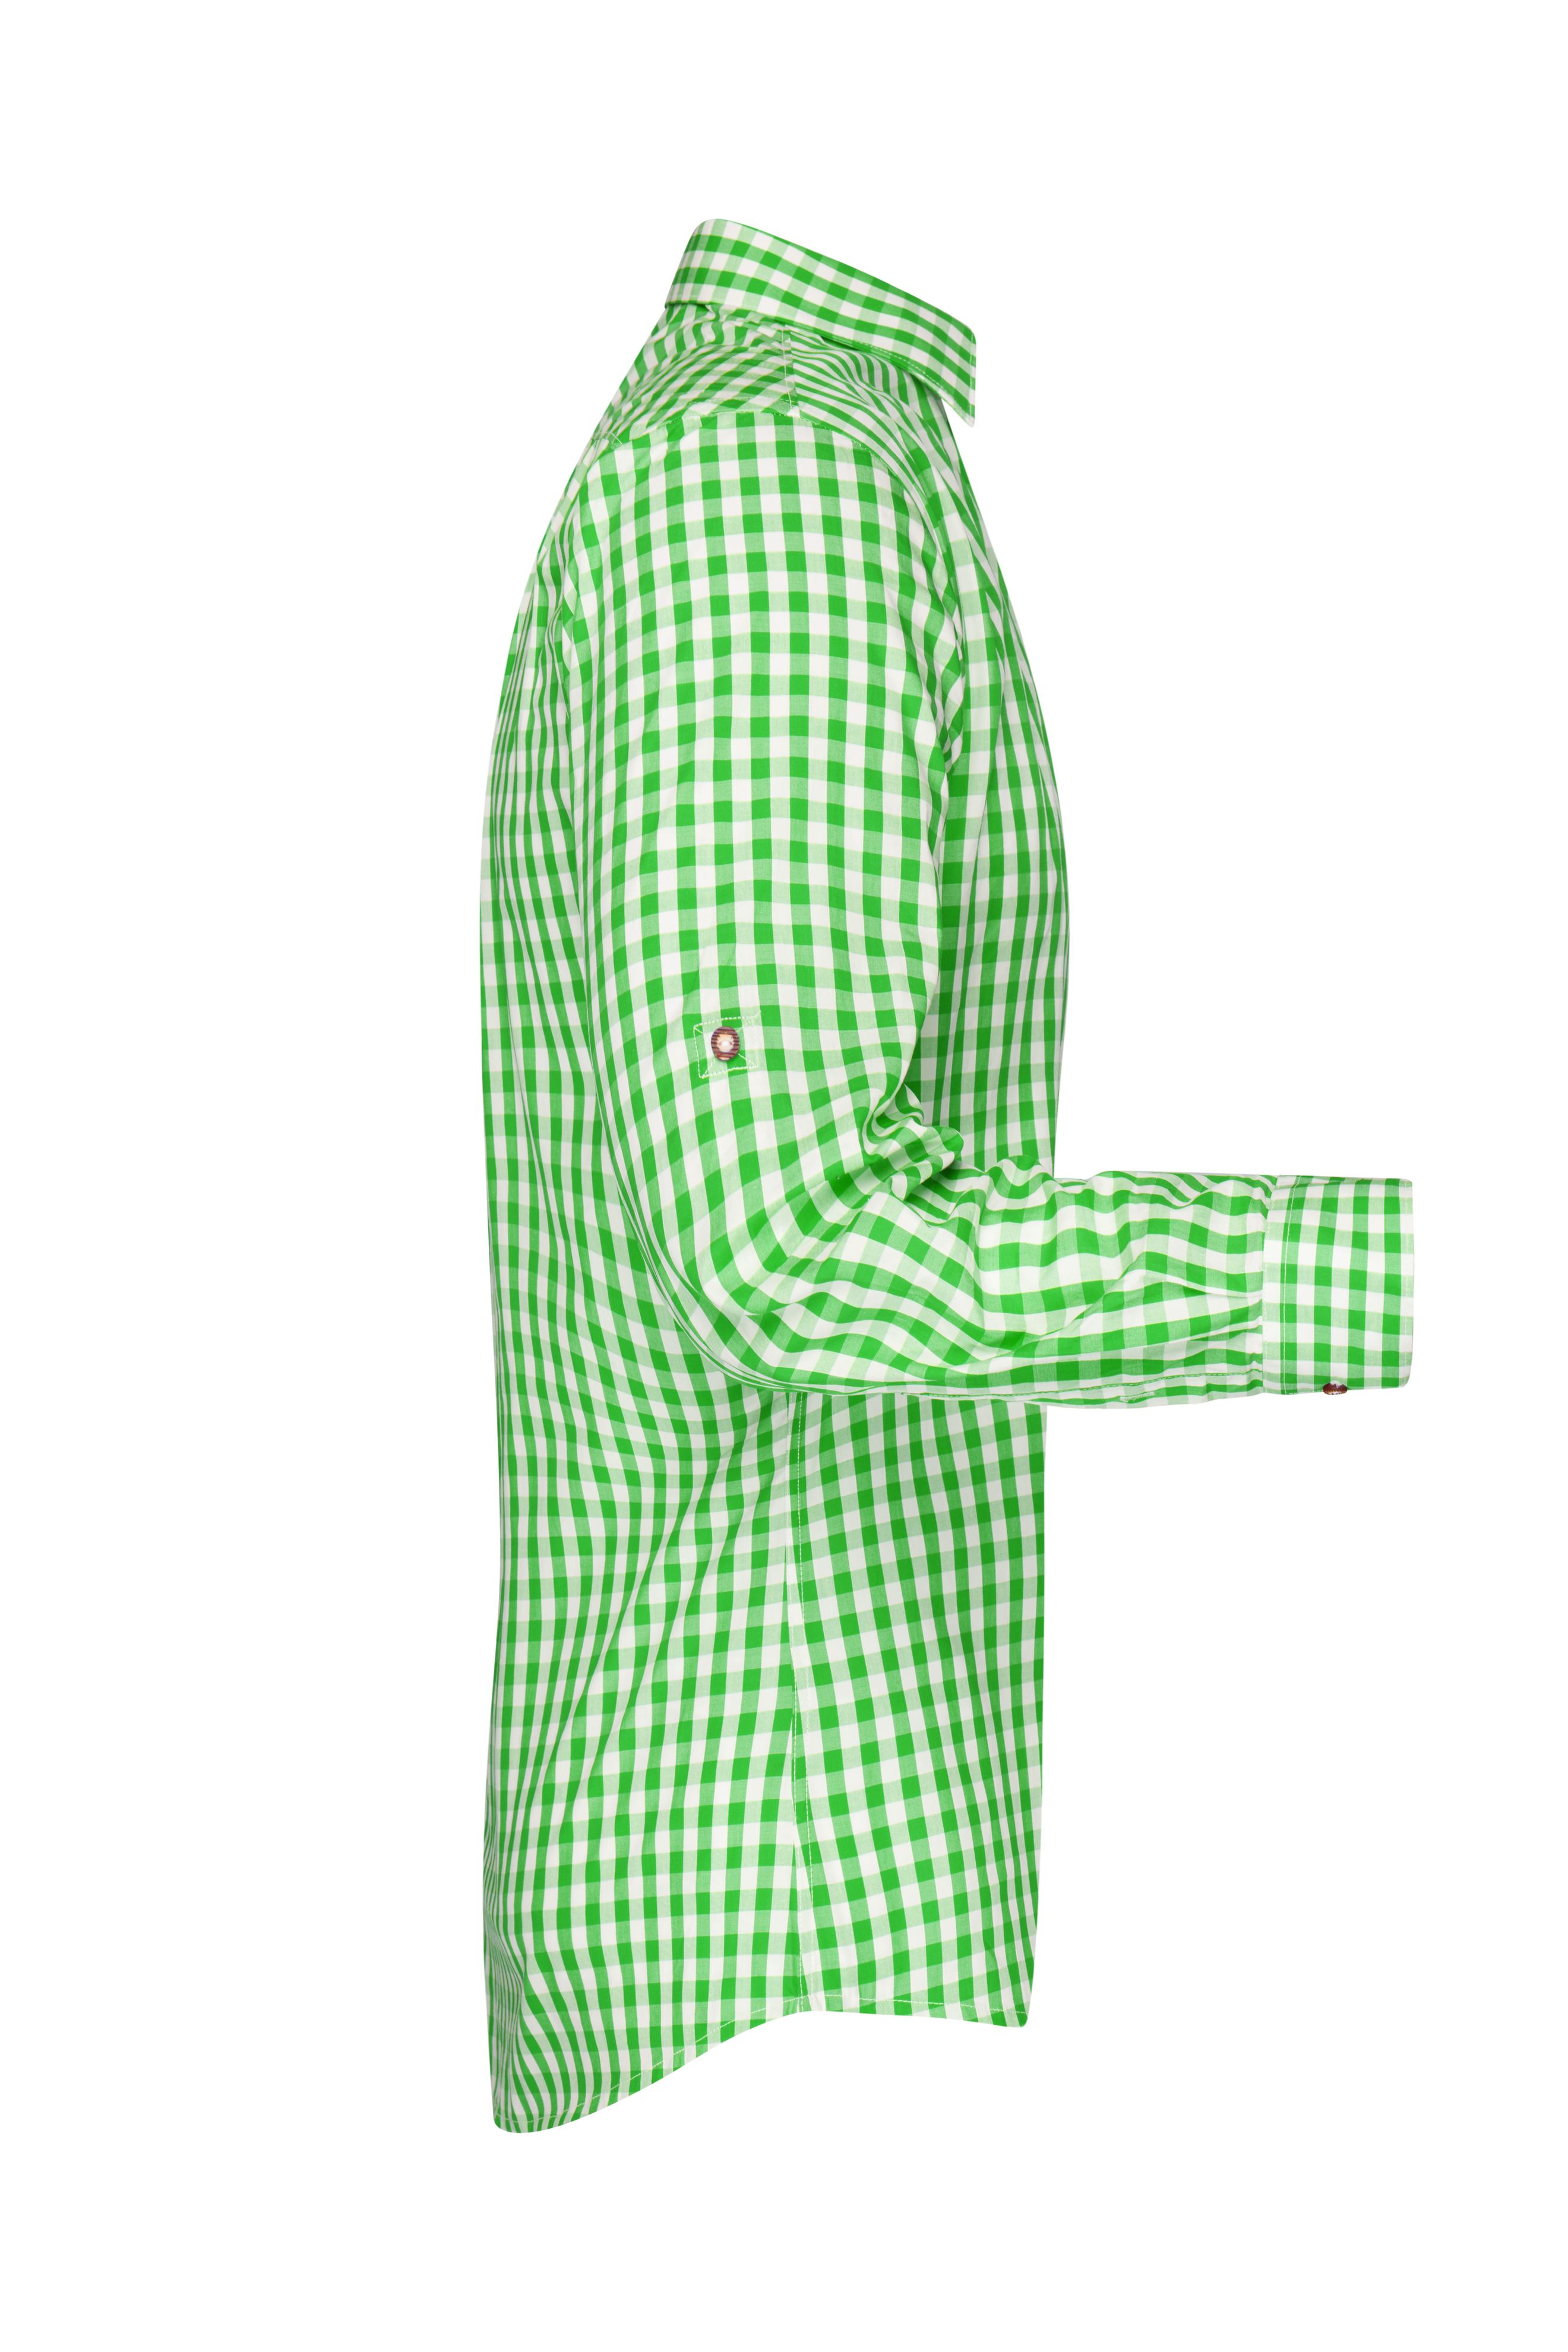 Men's Traditional Shirt JN638 Damen-Bluse und Herren-Hemd im klassischen Trachtenlook